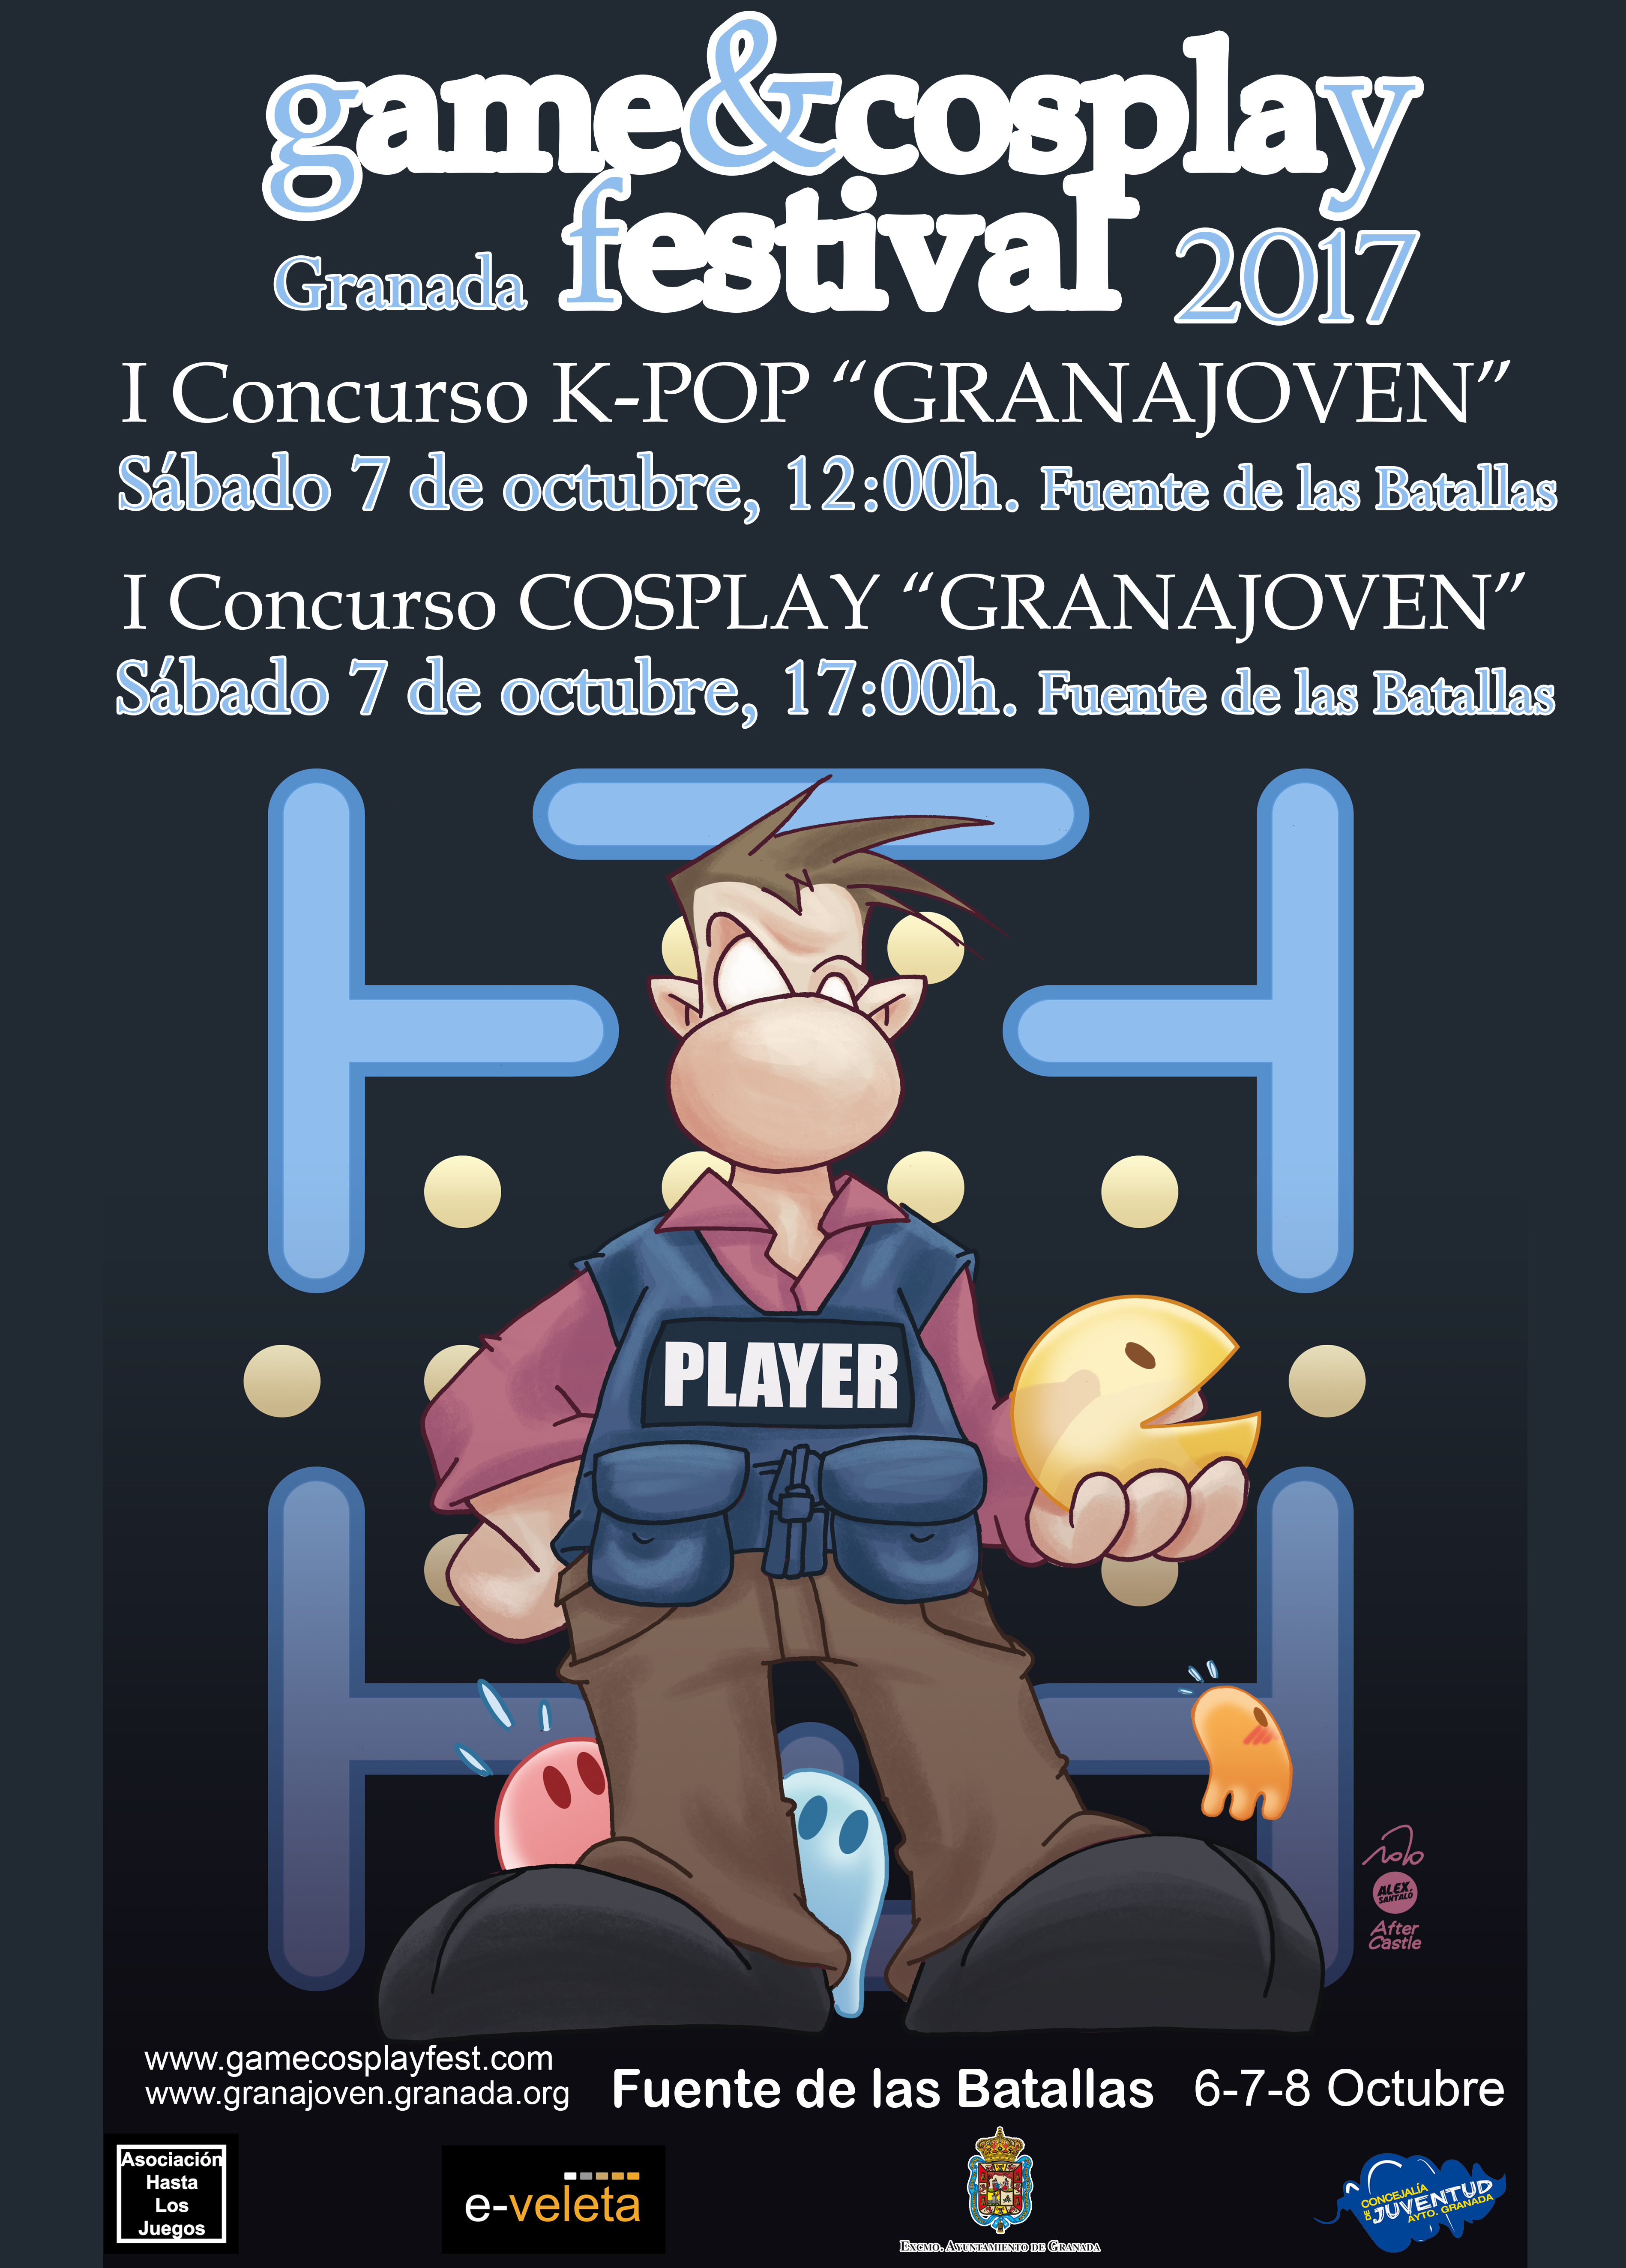 GAME&COSPLAY. I concurso K-PO "GranaJoven" y I Concurso COSPLAY "GranaJoven" 